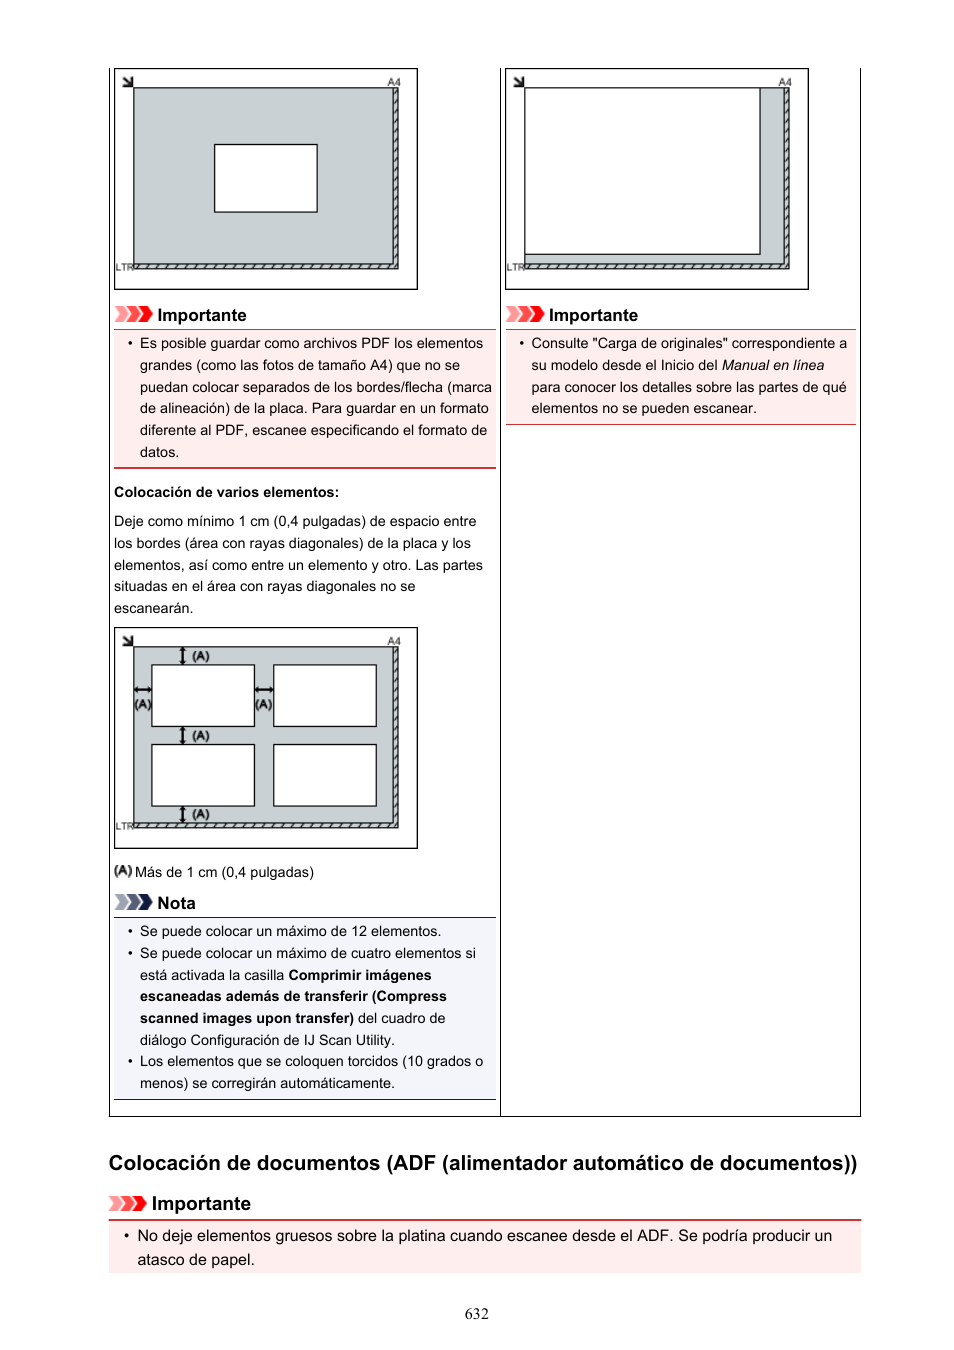 Importante | Canon PIXMA MX475 Manual del usuario | Página 632 / 973